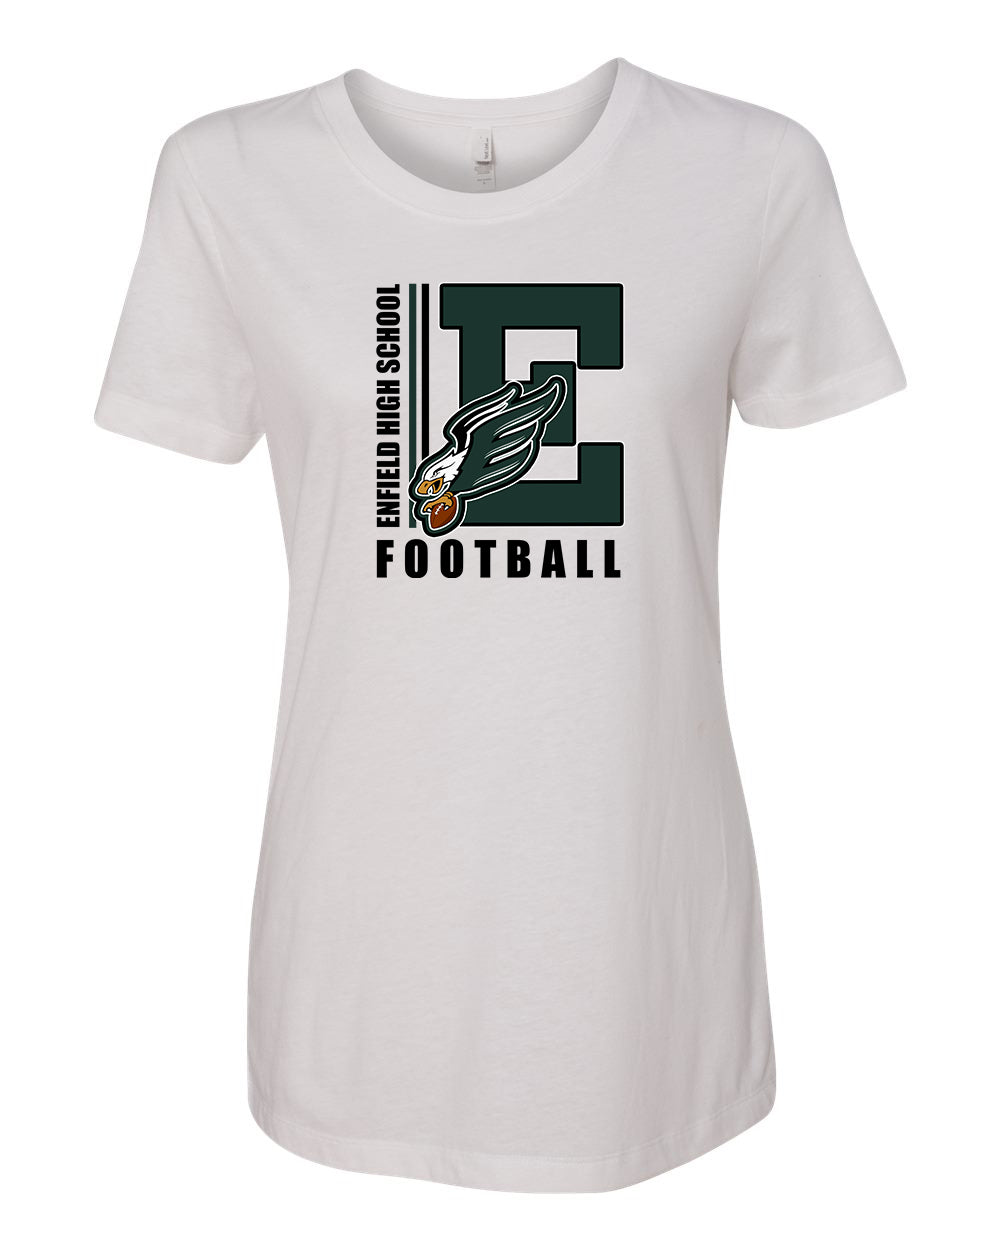 Enfield Eagles Football Womens T-shirt "Big E" - 1510 (color options available)